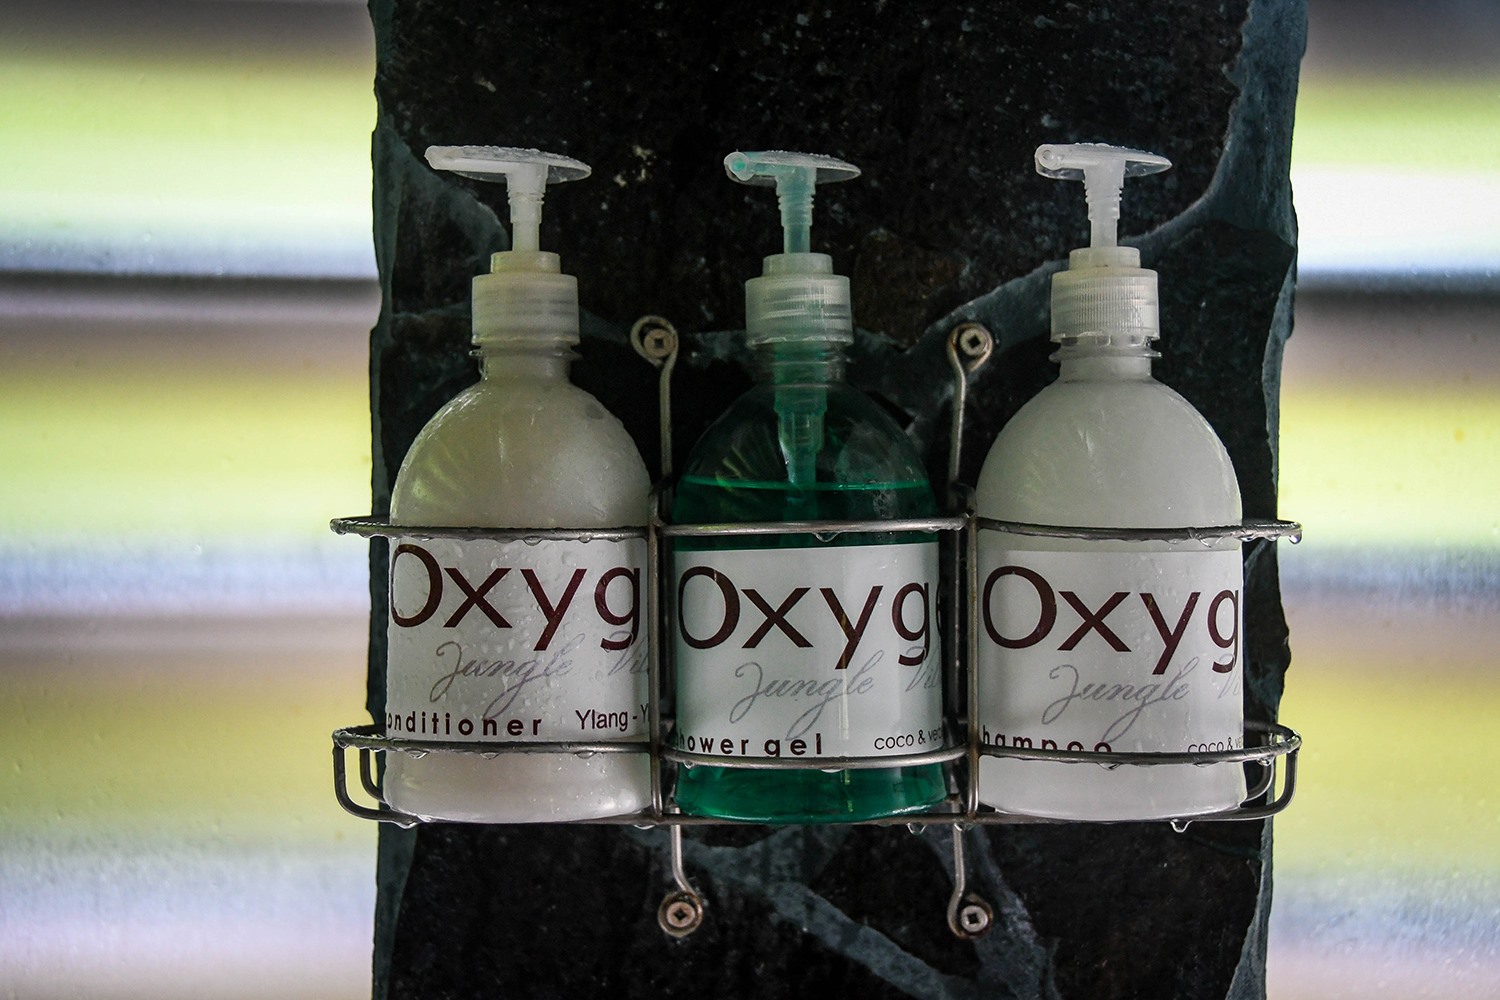 Oxygen Jungle Villas Reusable bottles for Shower